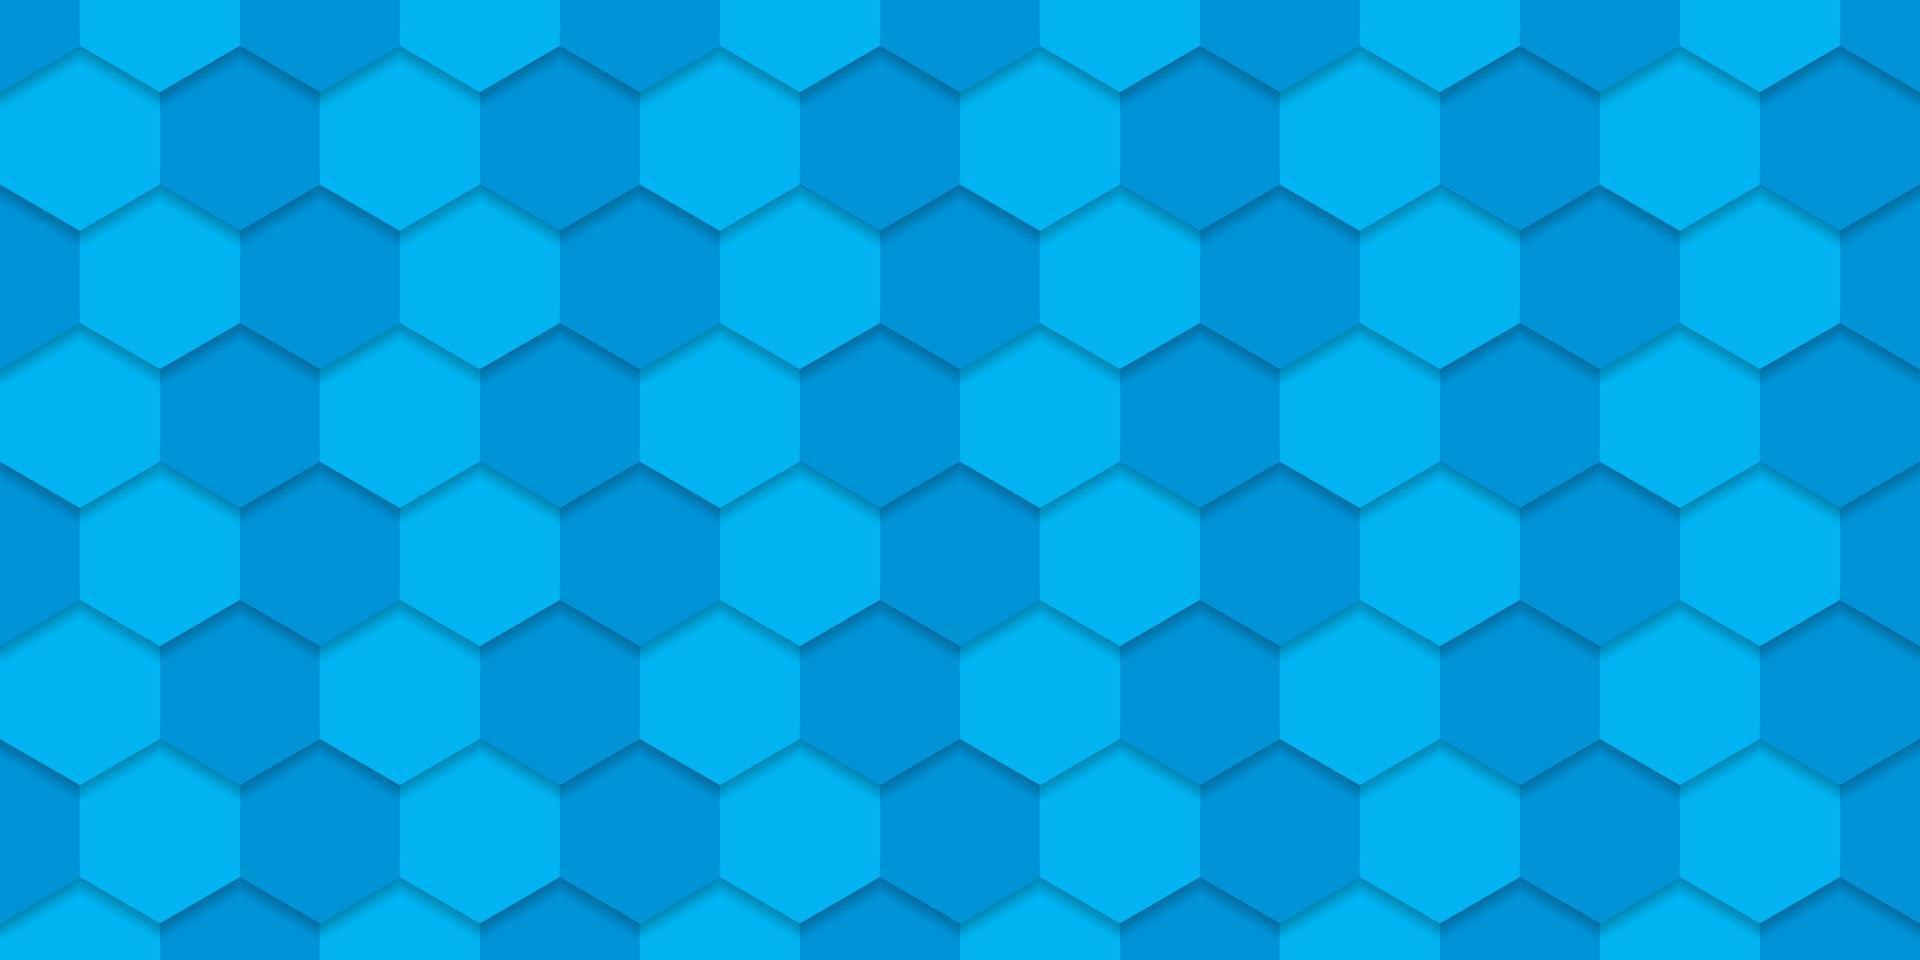 fondo futurista de hexágono azul claro. banner azul digital en blanco para química, ciencia, tecnología. patrón azul brillante hexagonal 3d abstracto. diseño de papel tapiz moderno. ilustración vectorial vector